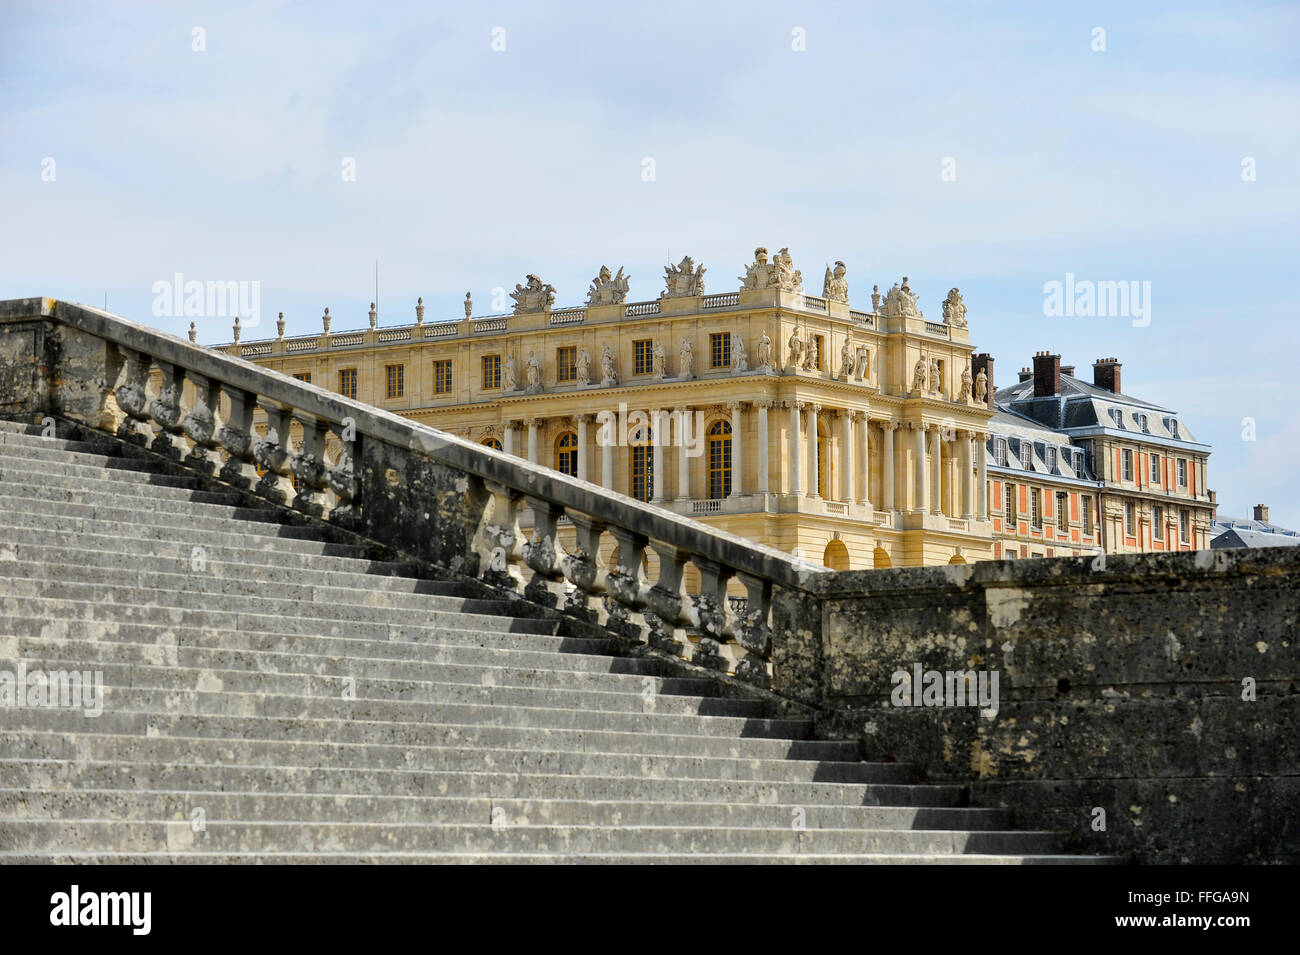 Chateau Versailles giardino e parco, scale a parterre du midi Ile de france europe Foto Stock